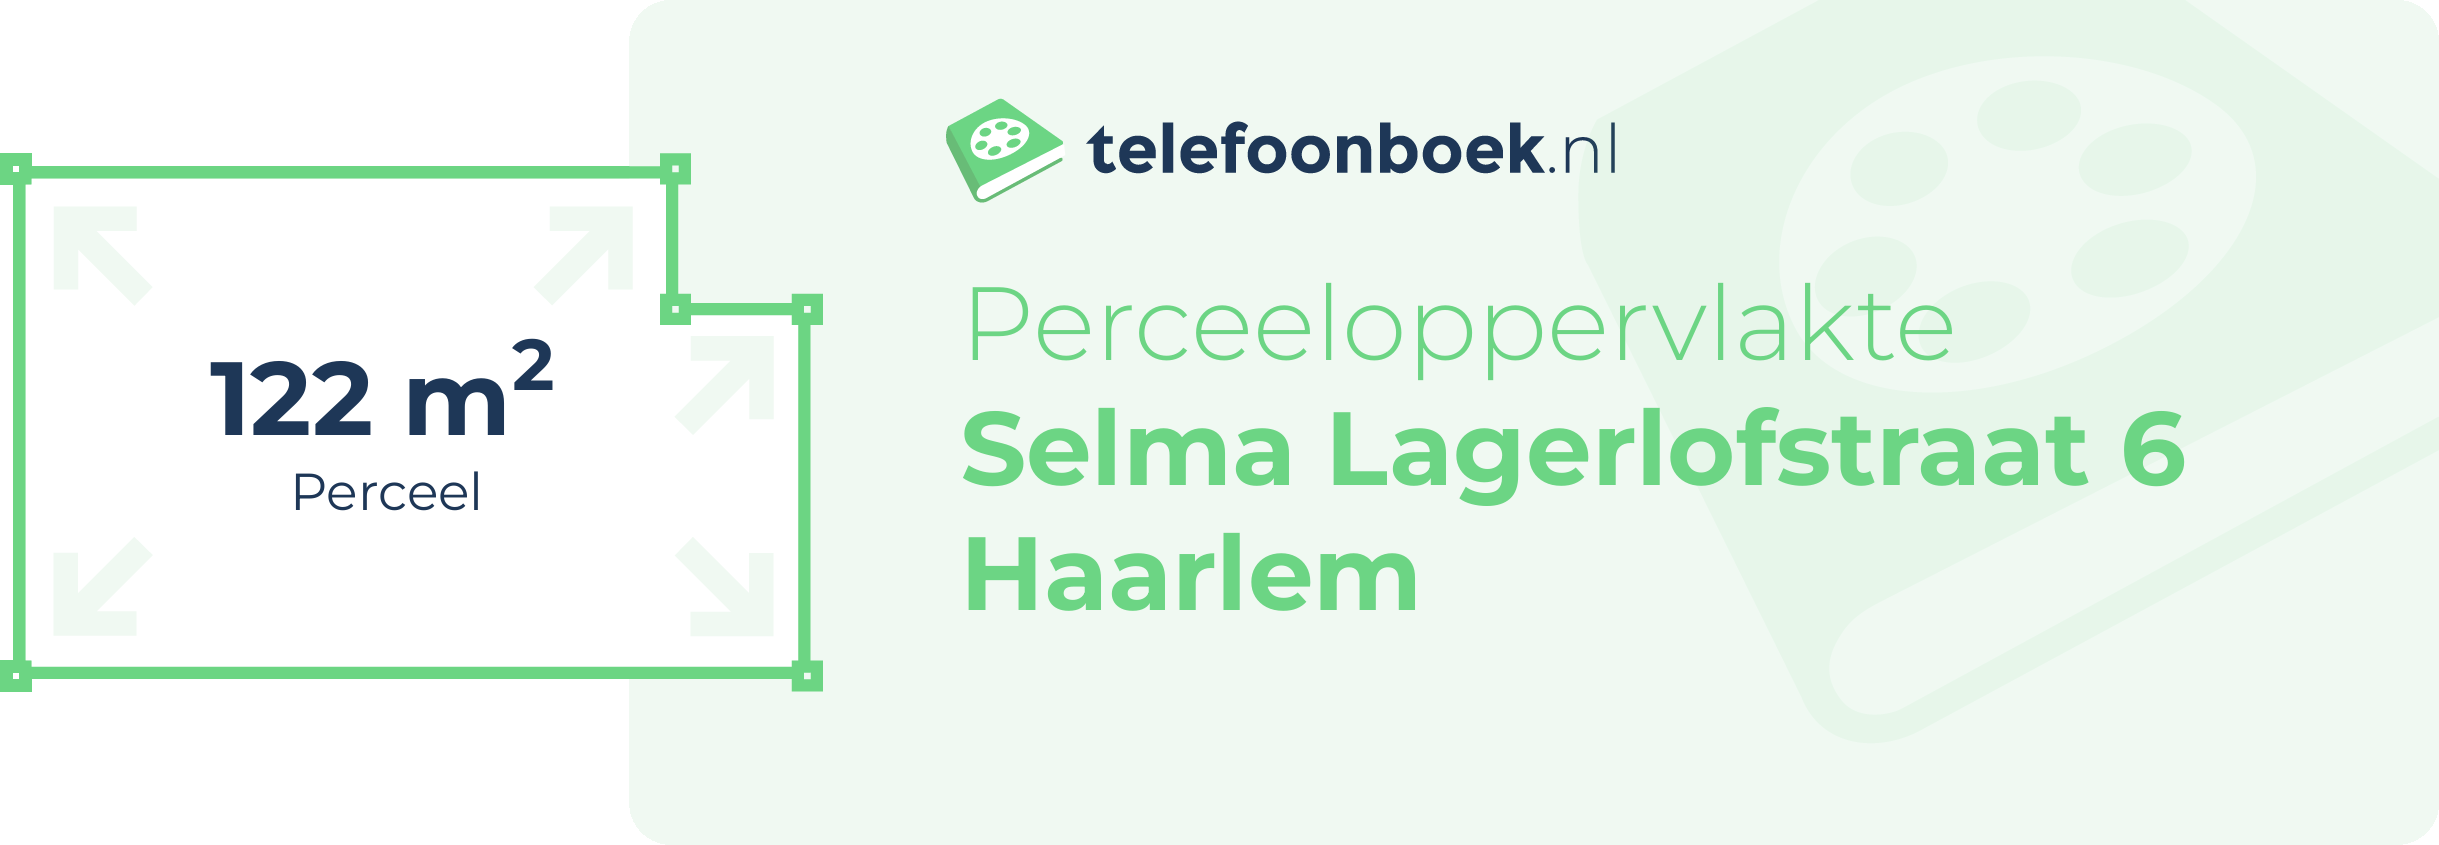 Perceeloppervlakte Selma Lagerlofstraat 6 Haarlem